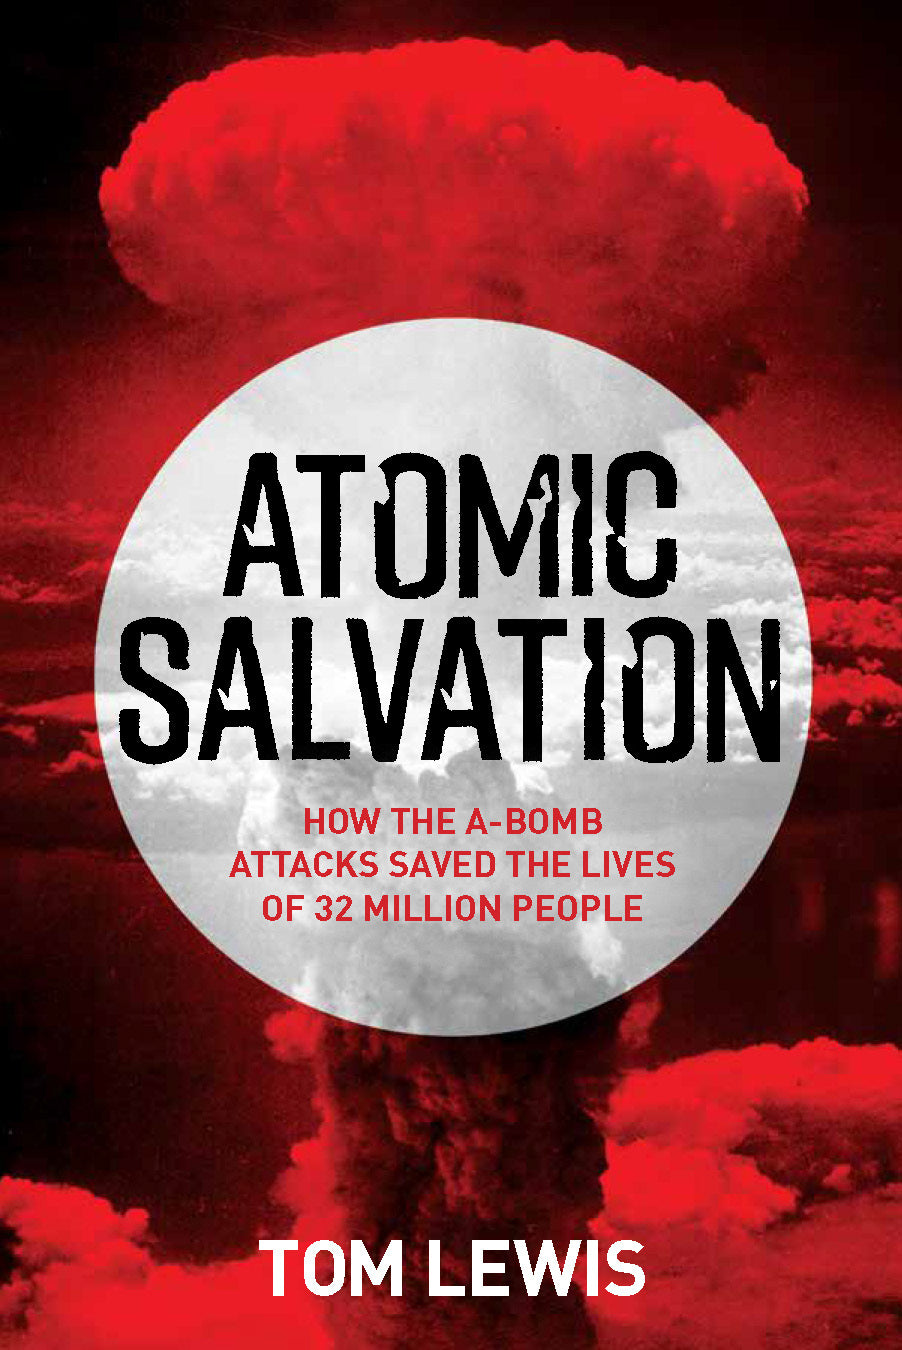 Atomic Salvation